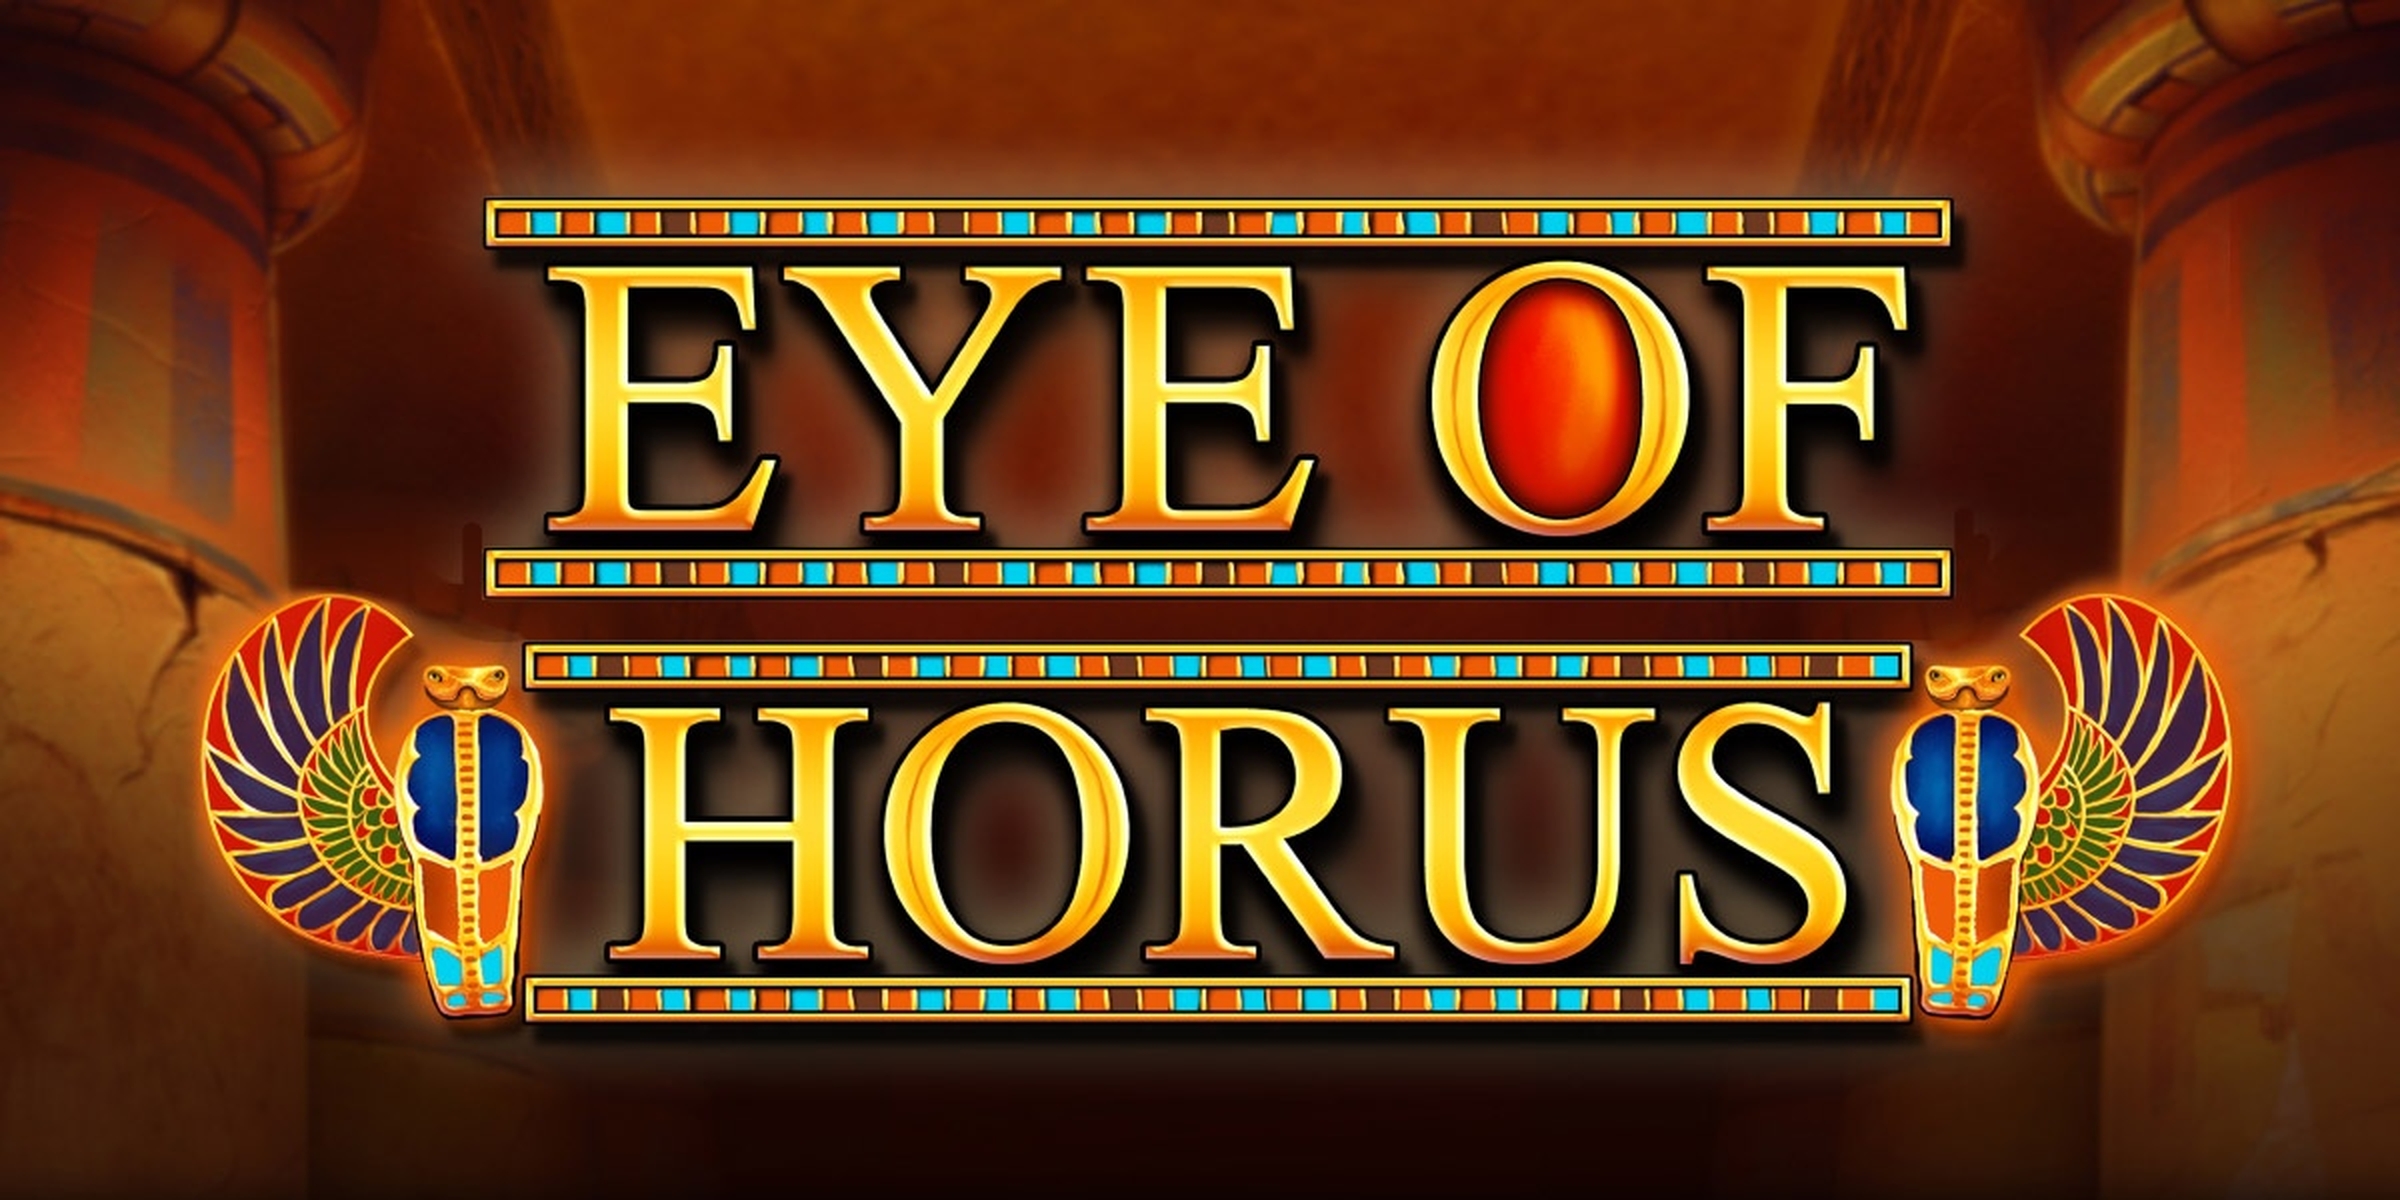 Eye of horus online casino slot game by oboent